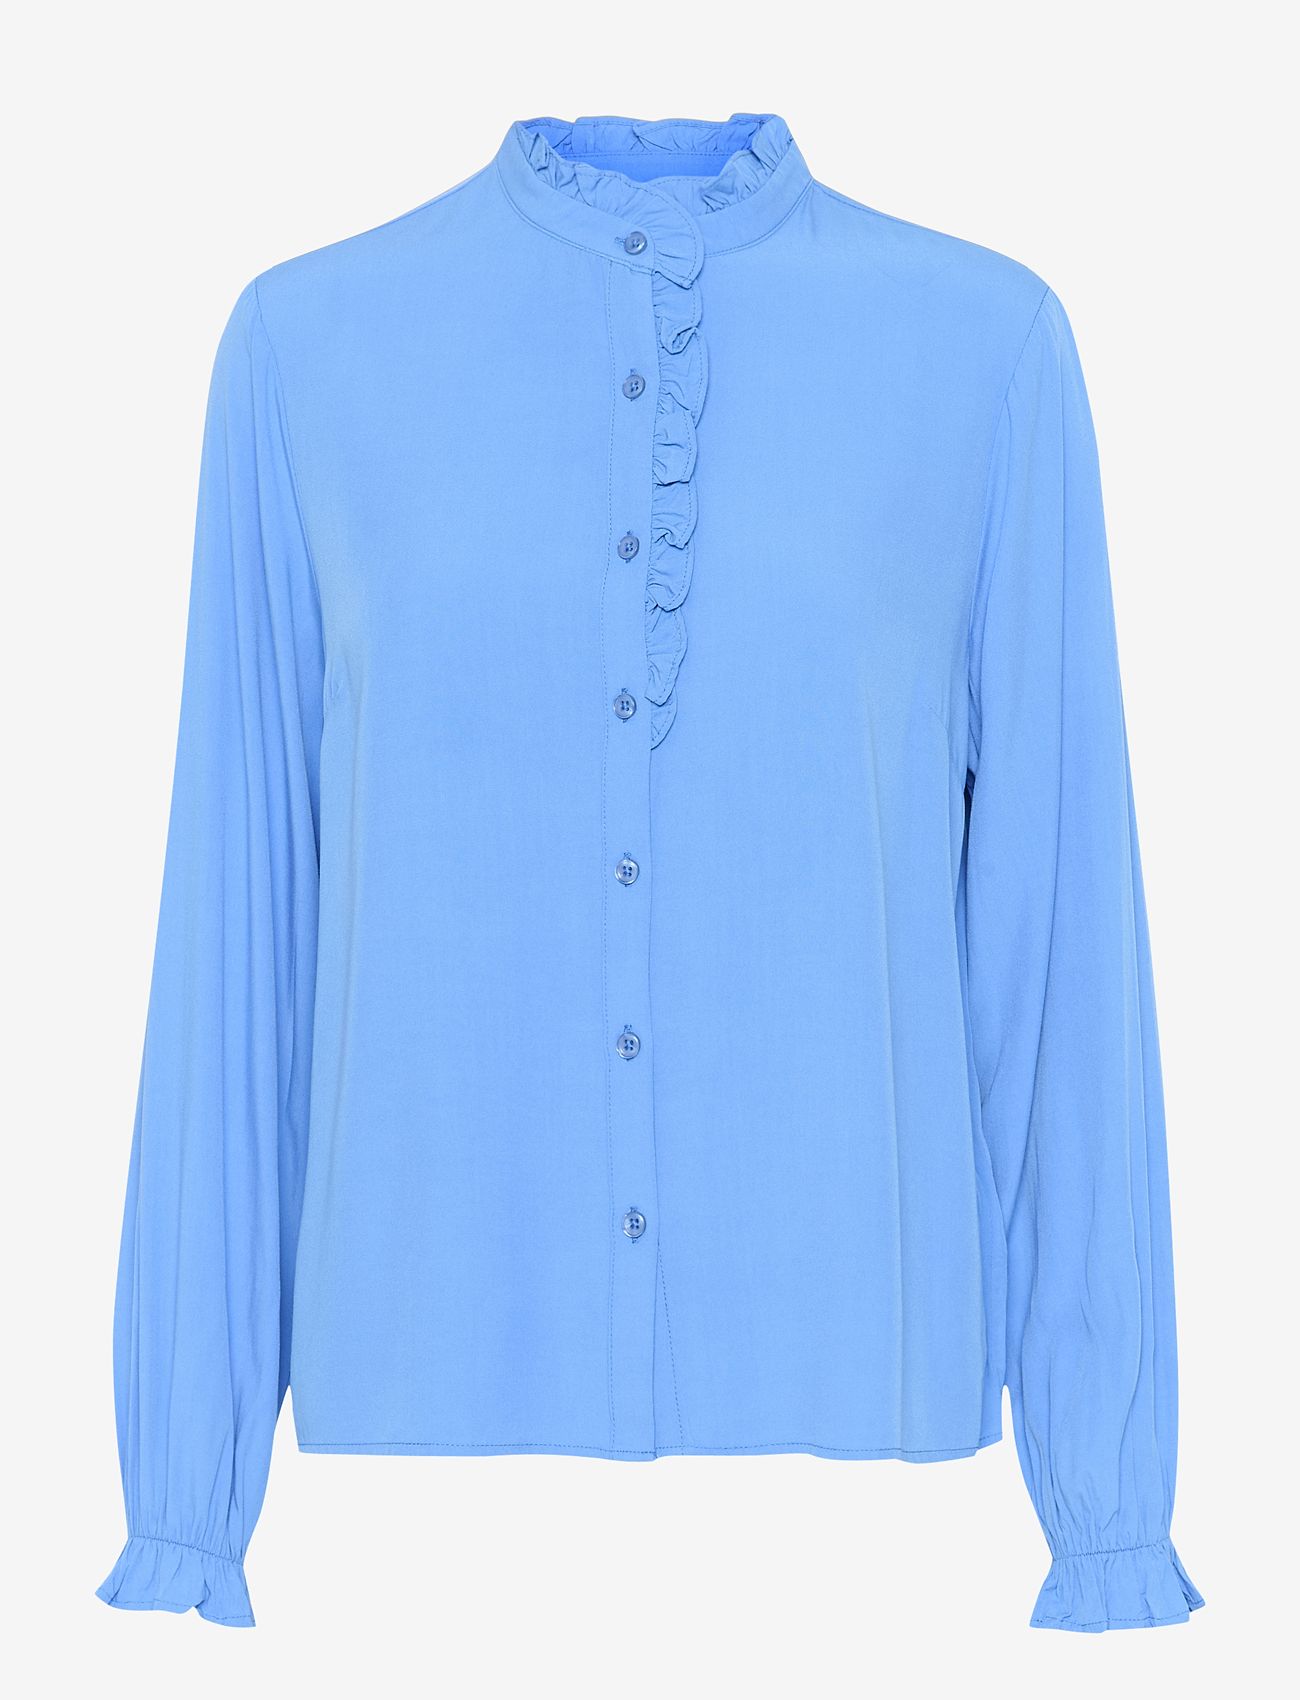 Cream - CRVenea Shirt - long-sleeved shirts - marina - 0